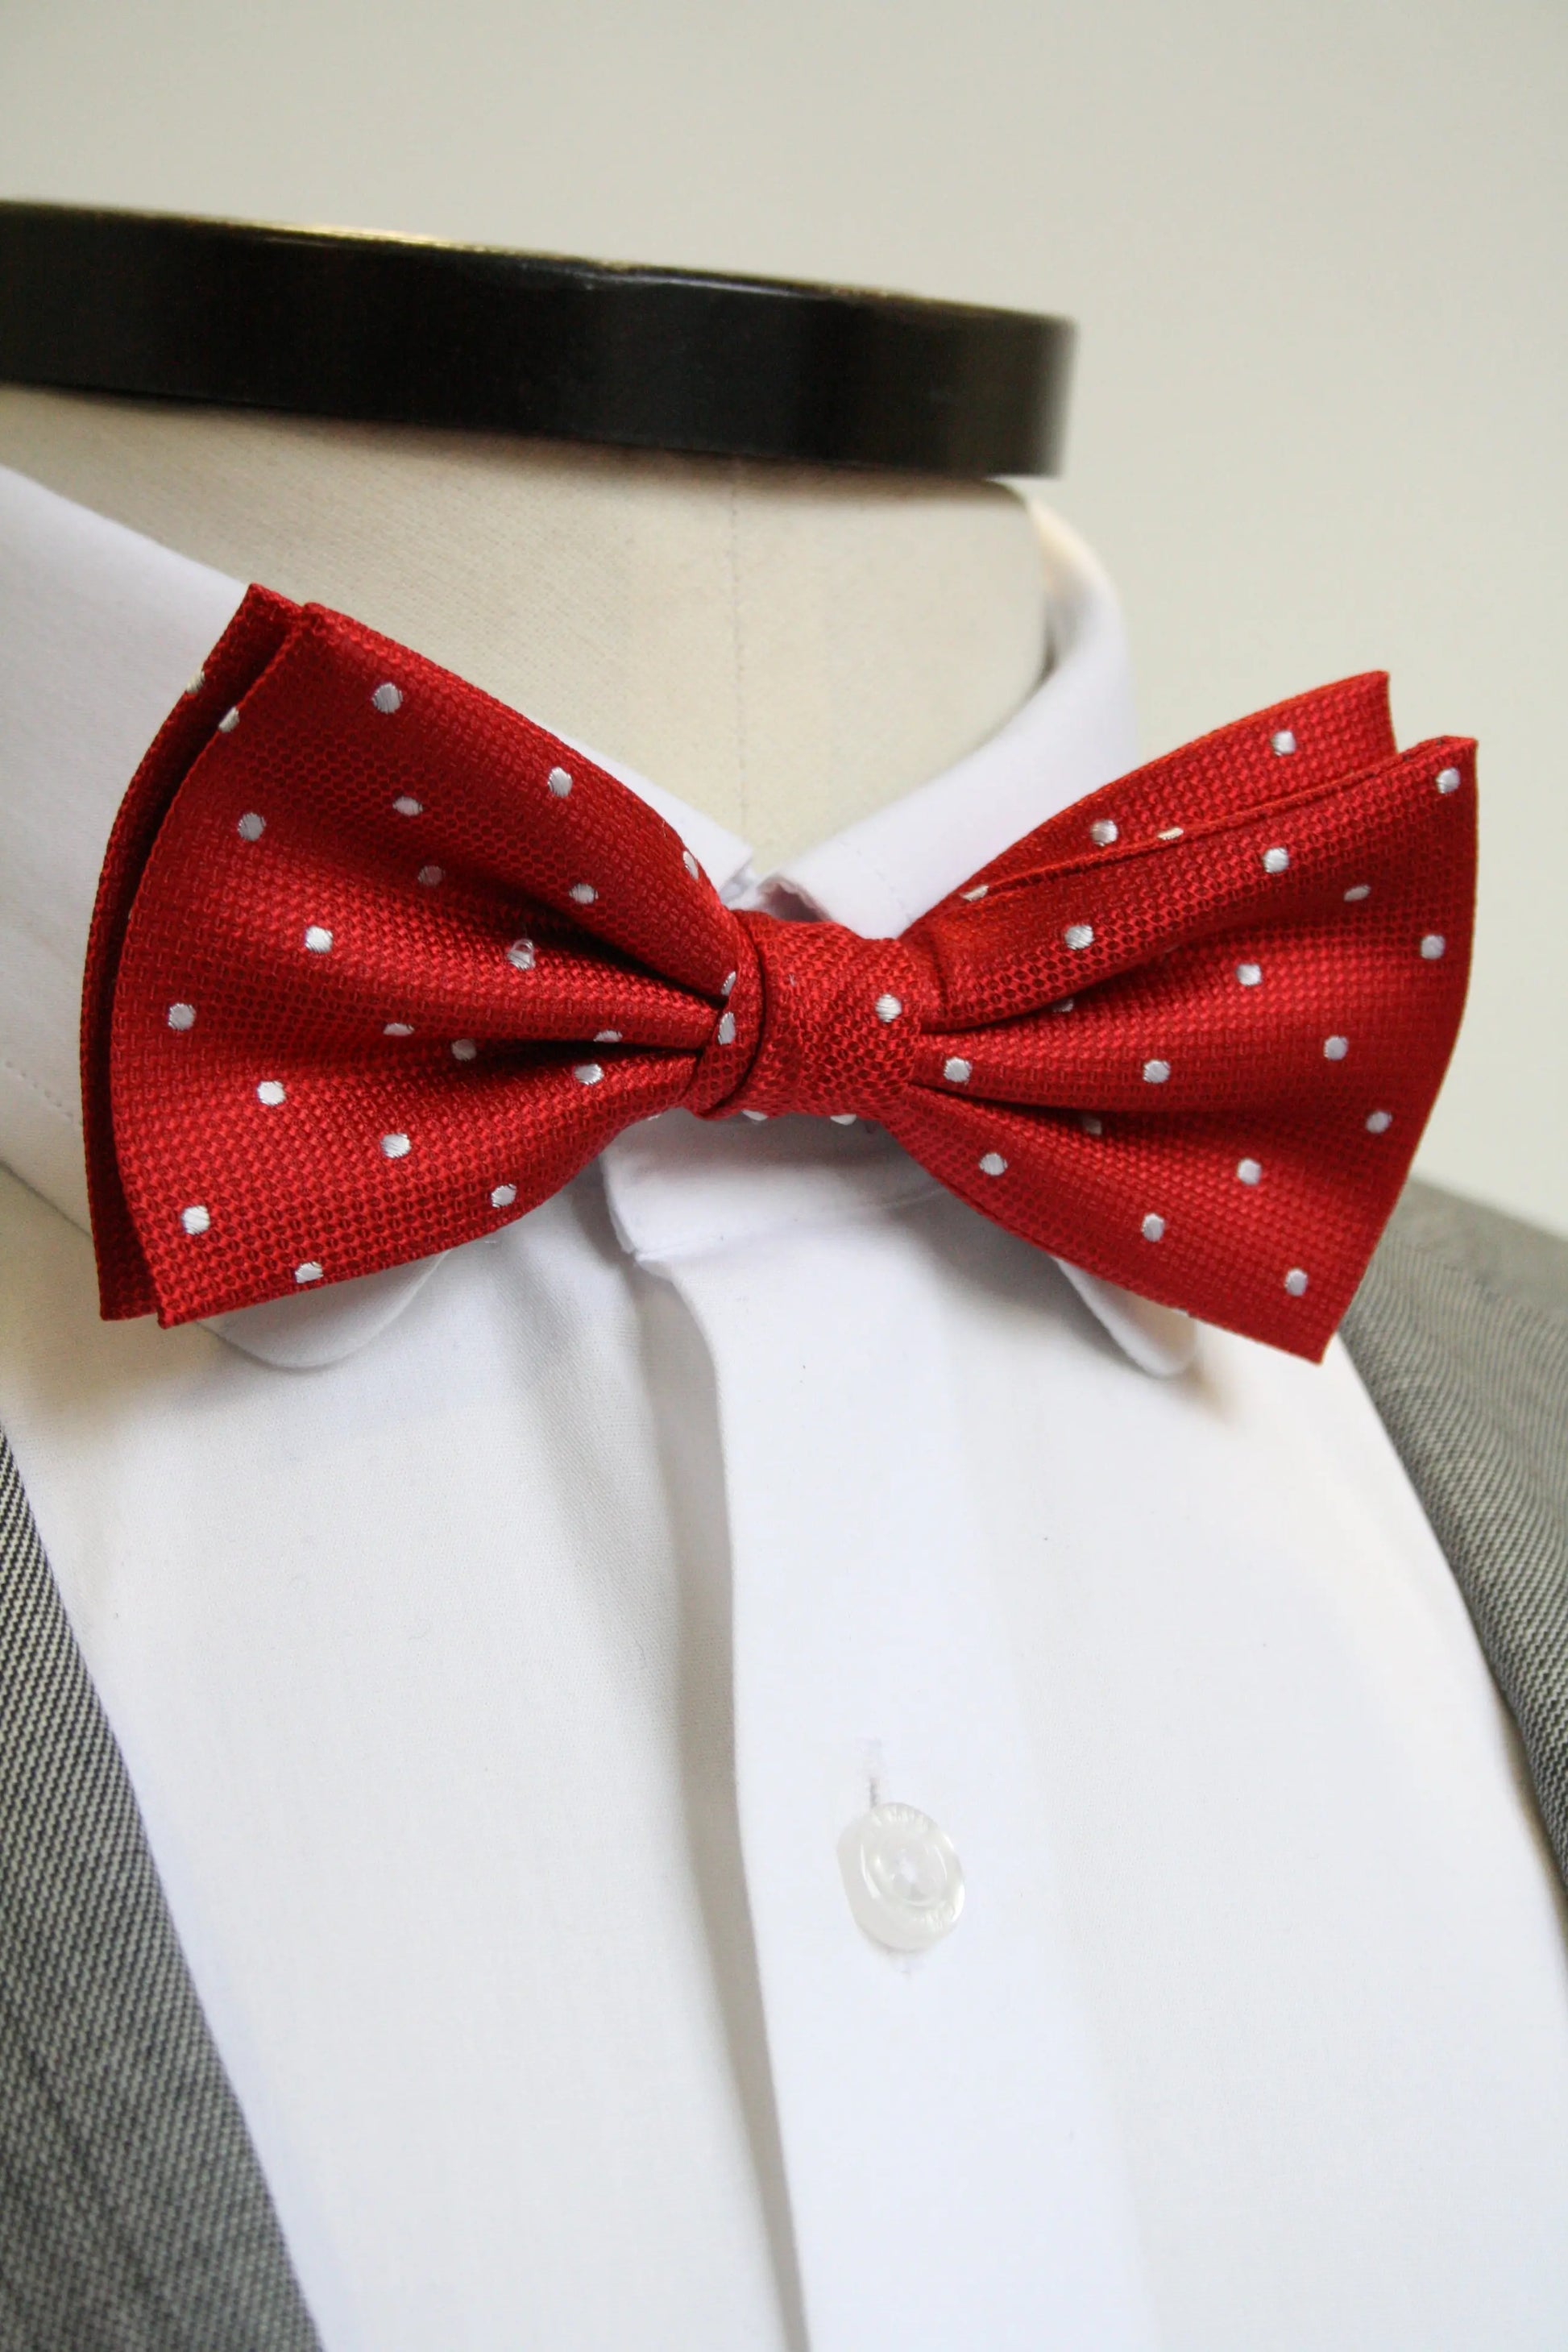 Knightsbridge Neckwear Micro Polka Dot Pre-Tied Silk Bow Tie - Red From Woven Durham